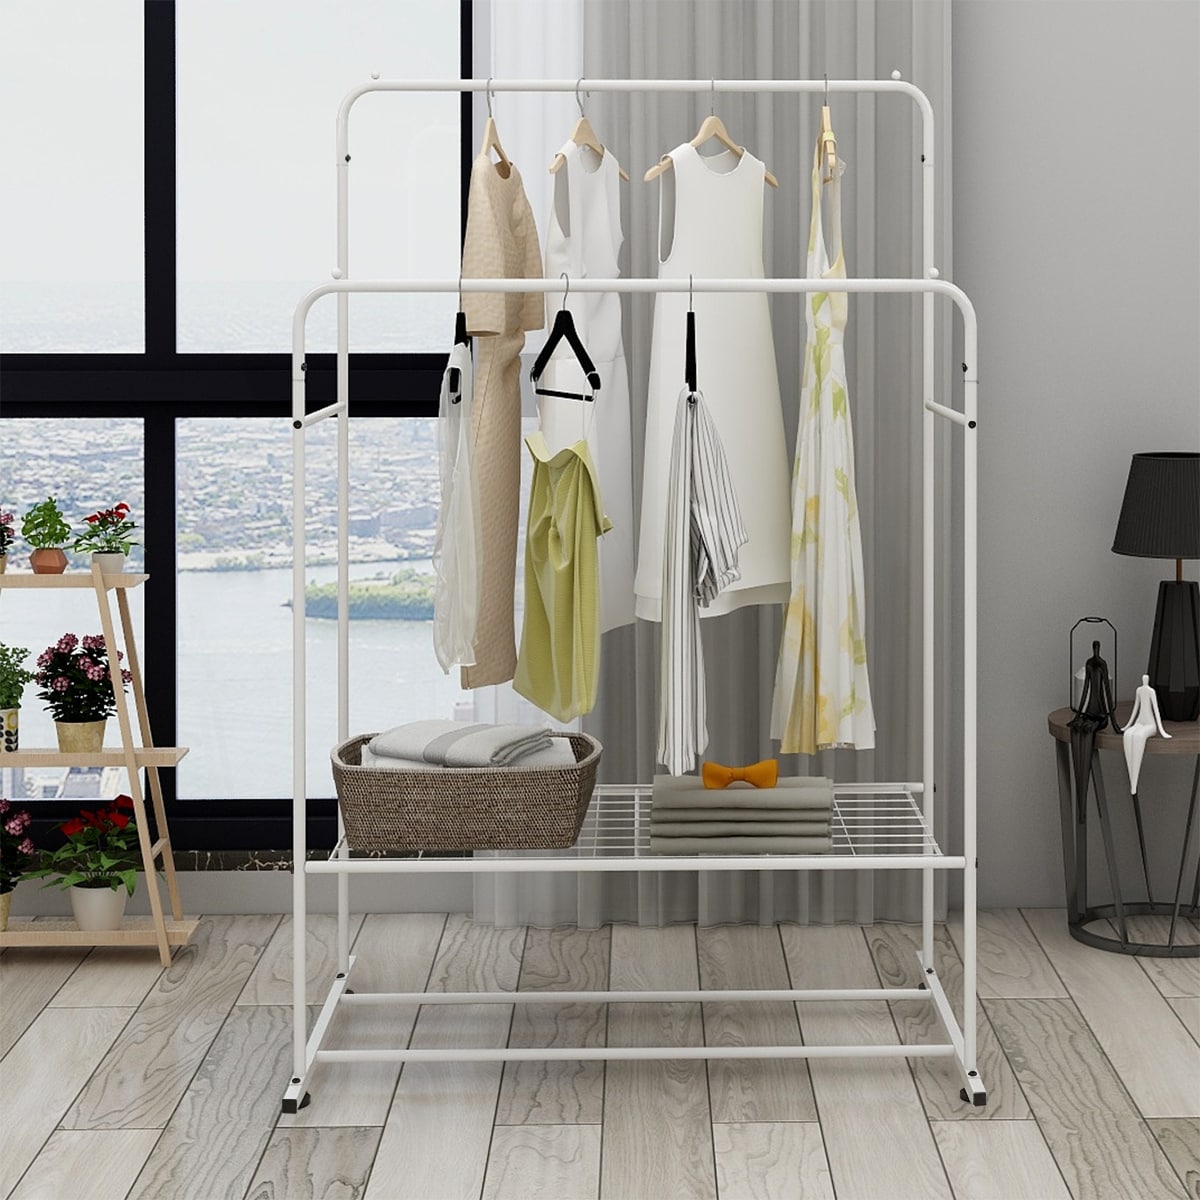 https://ak1.ostkcdn.com/images/products/is/images/direct/879d6eb3e0791a8f6ed94601dbe13d5145c338de/Garment-Rack-Freestanding-Hanger-Double-Rods-Multi-functional-Bedroom-Clothing-Rack-White.jpg